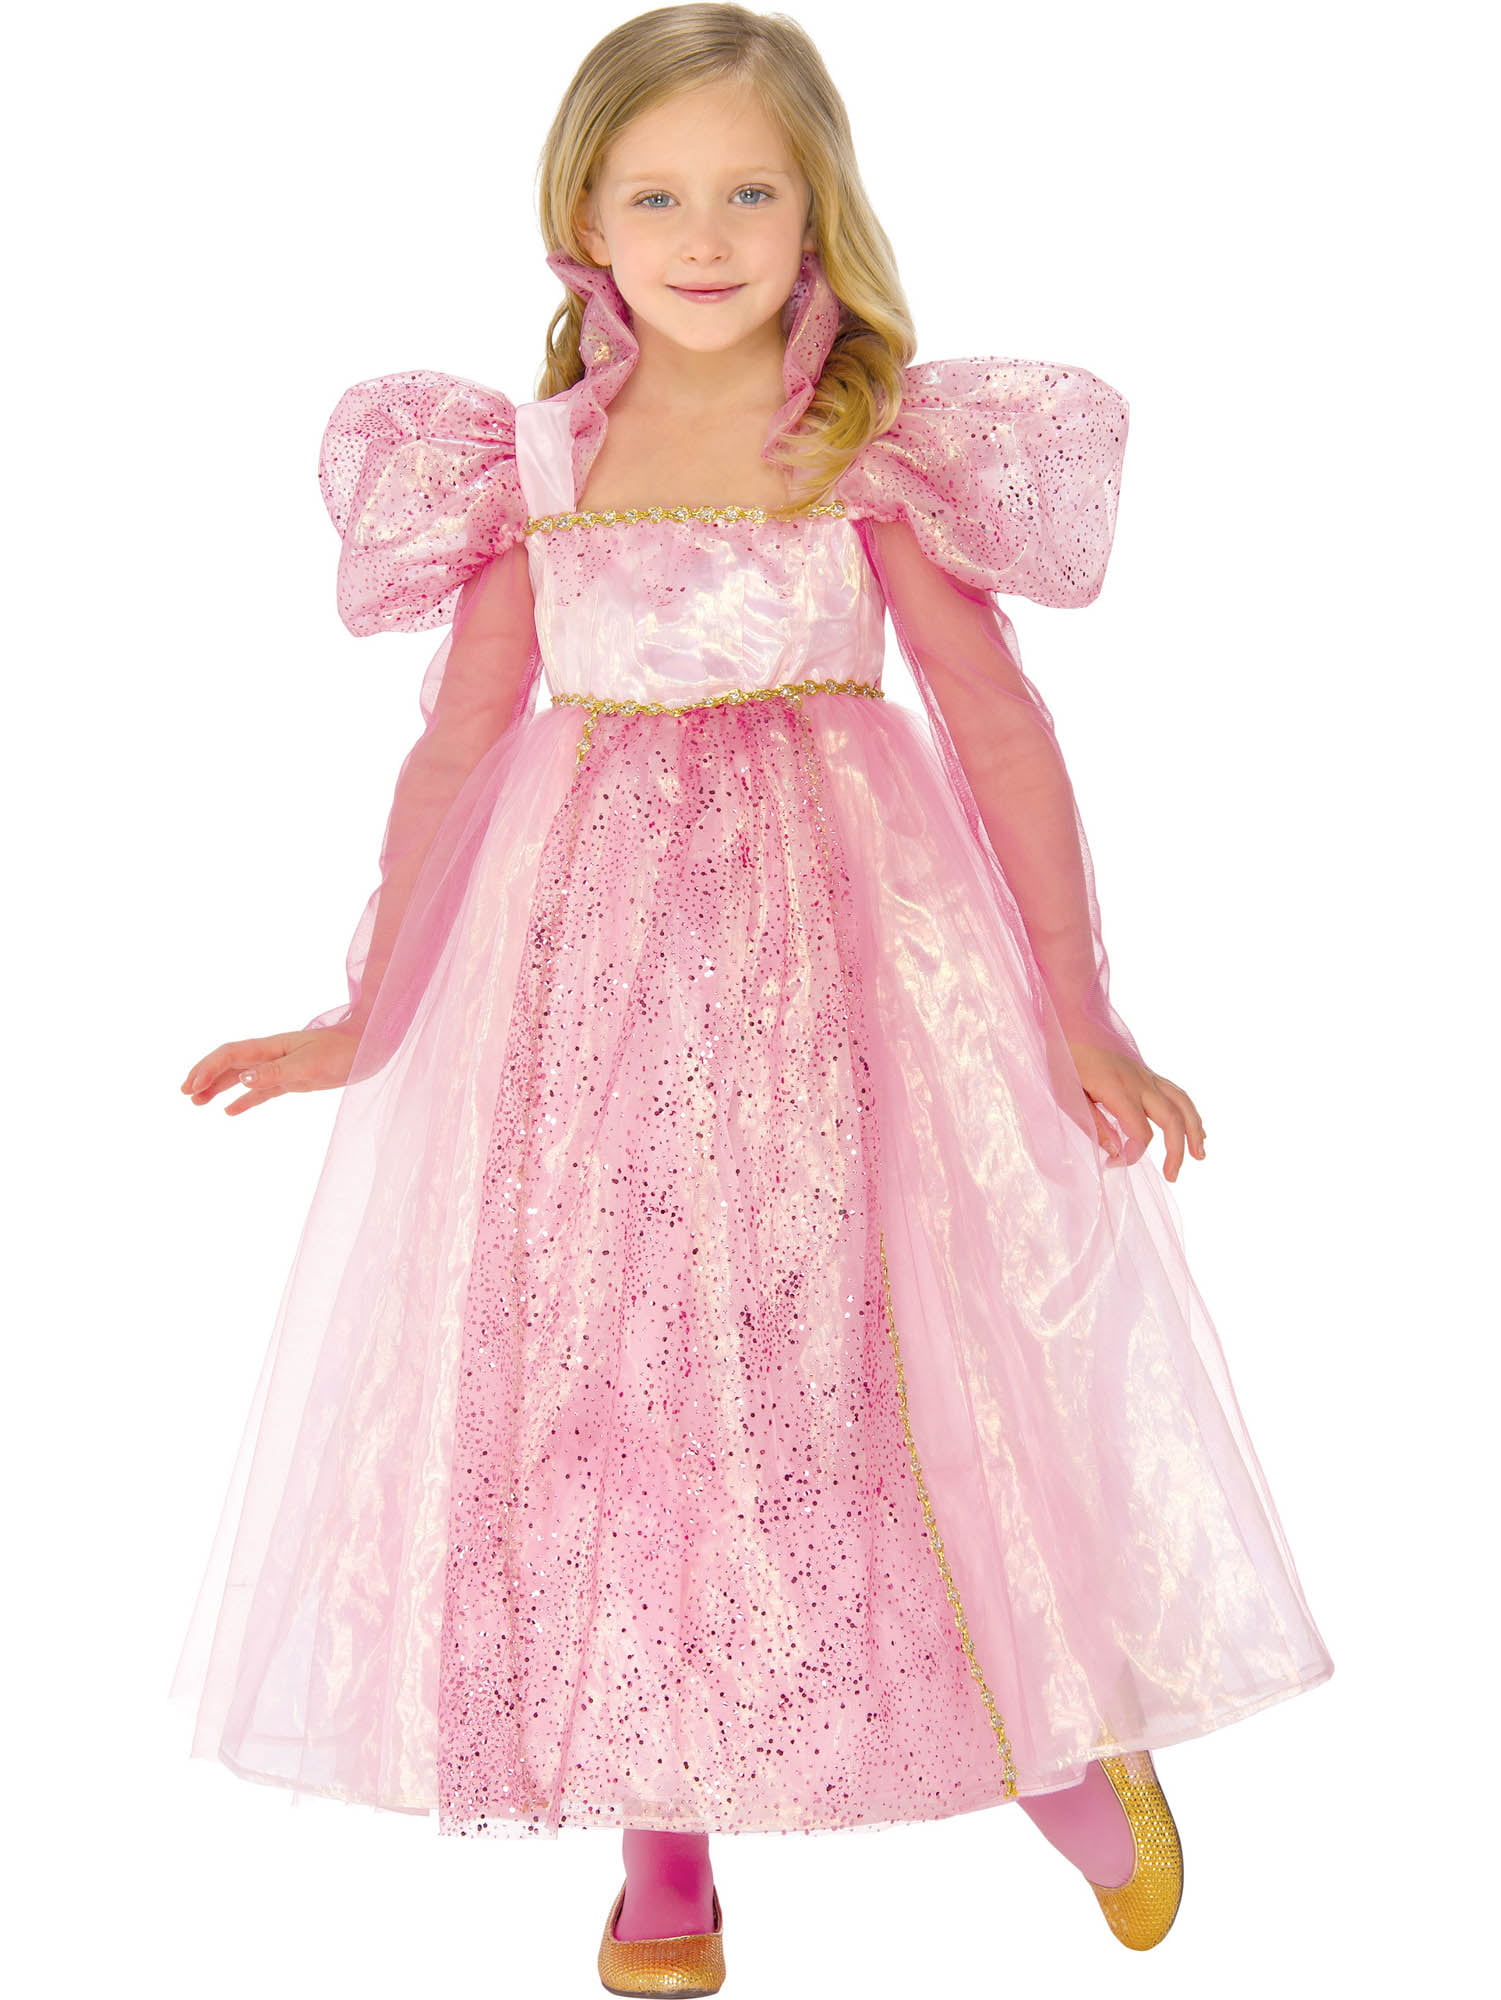 Glitter Princess Girls Costume - Walmart.com - Walmart.com